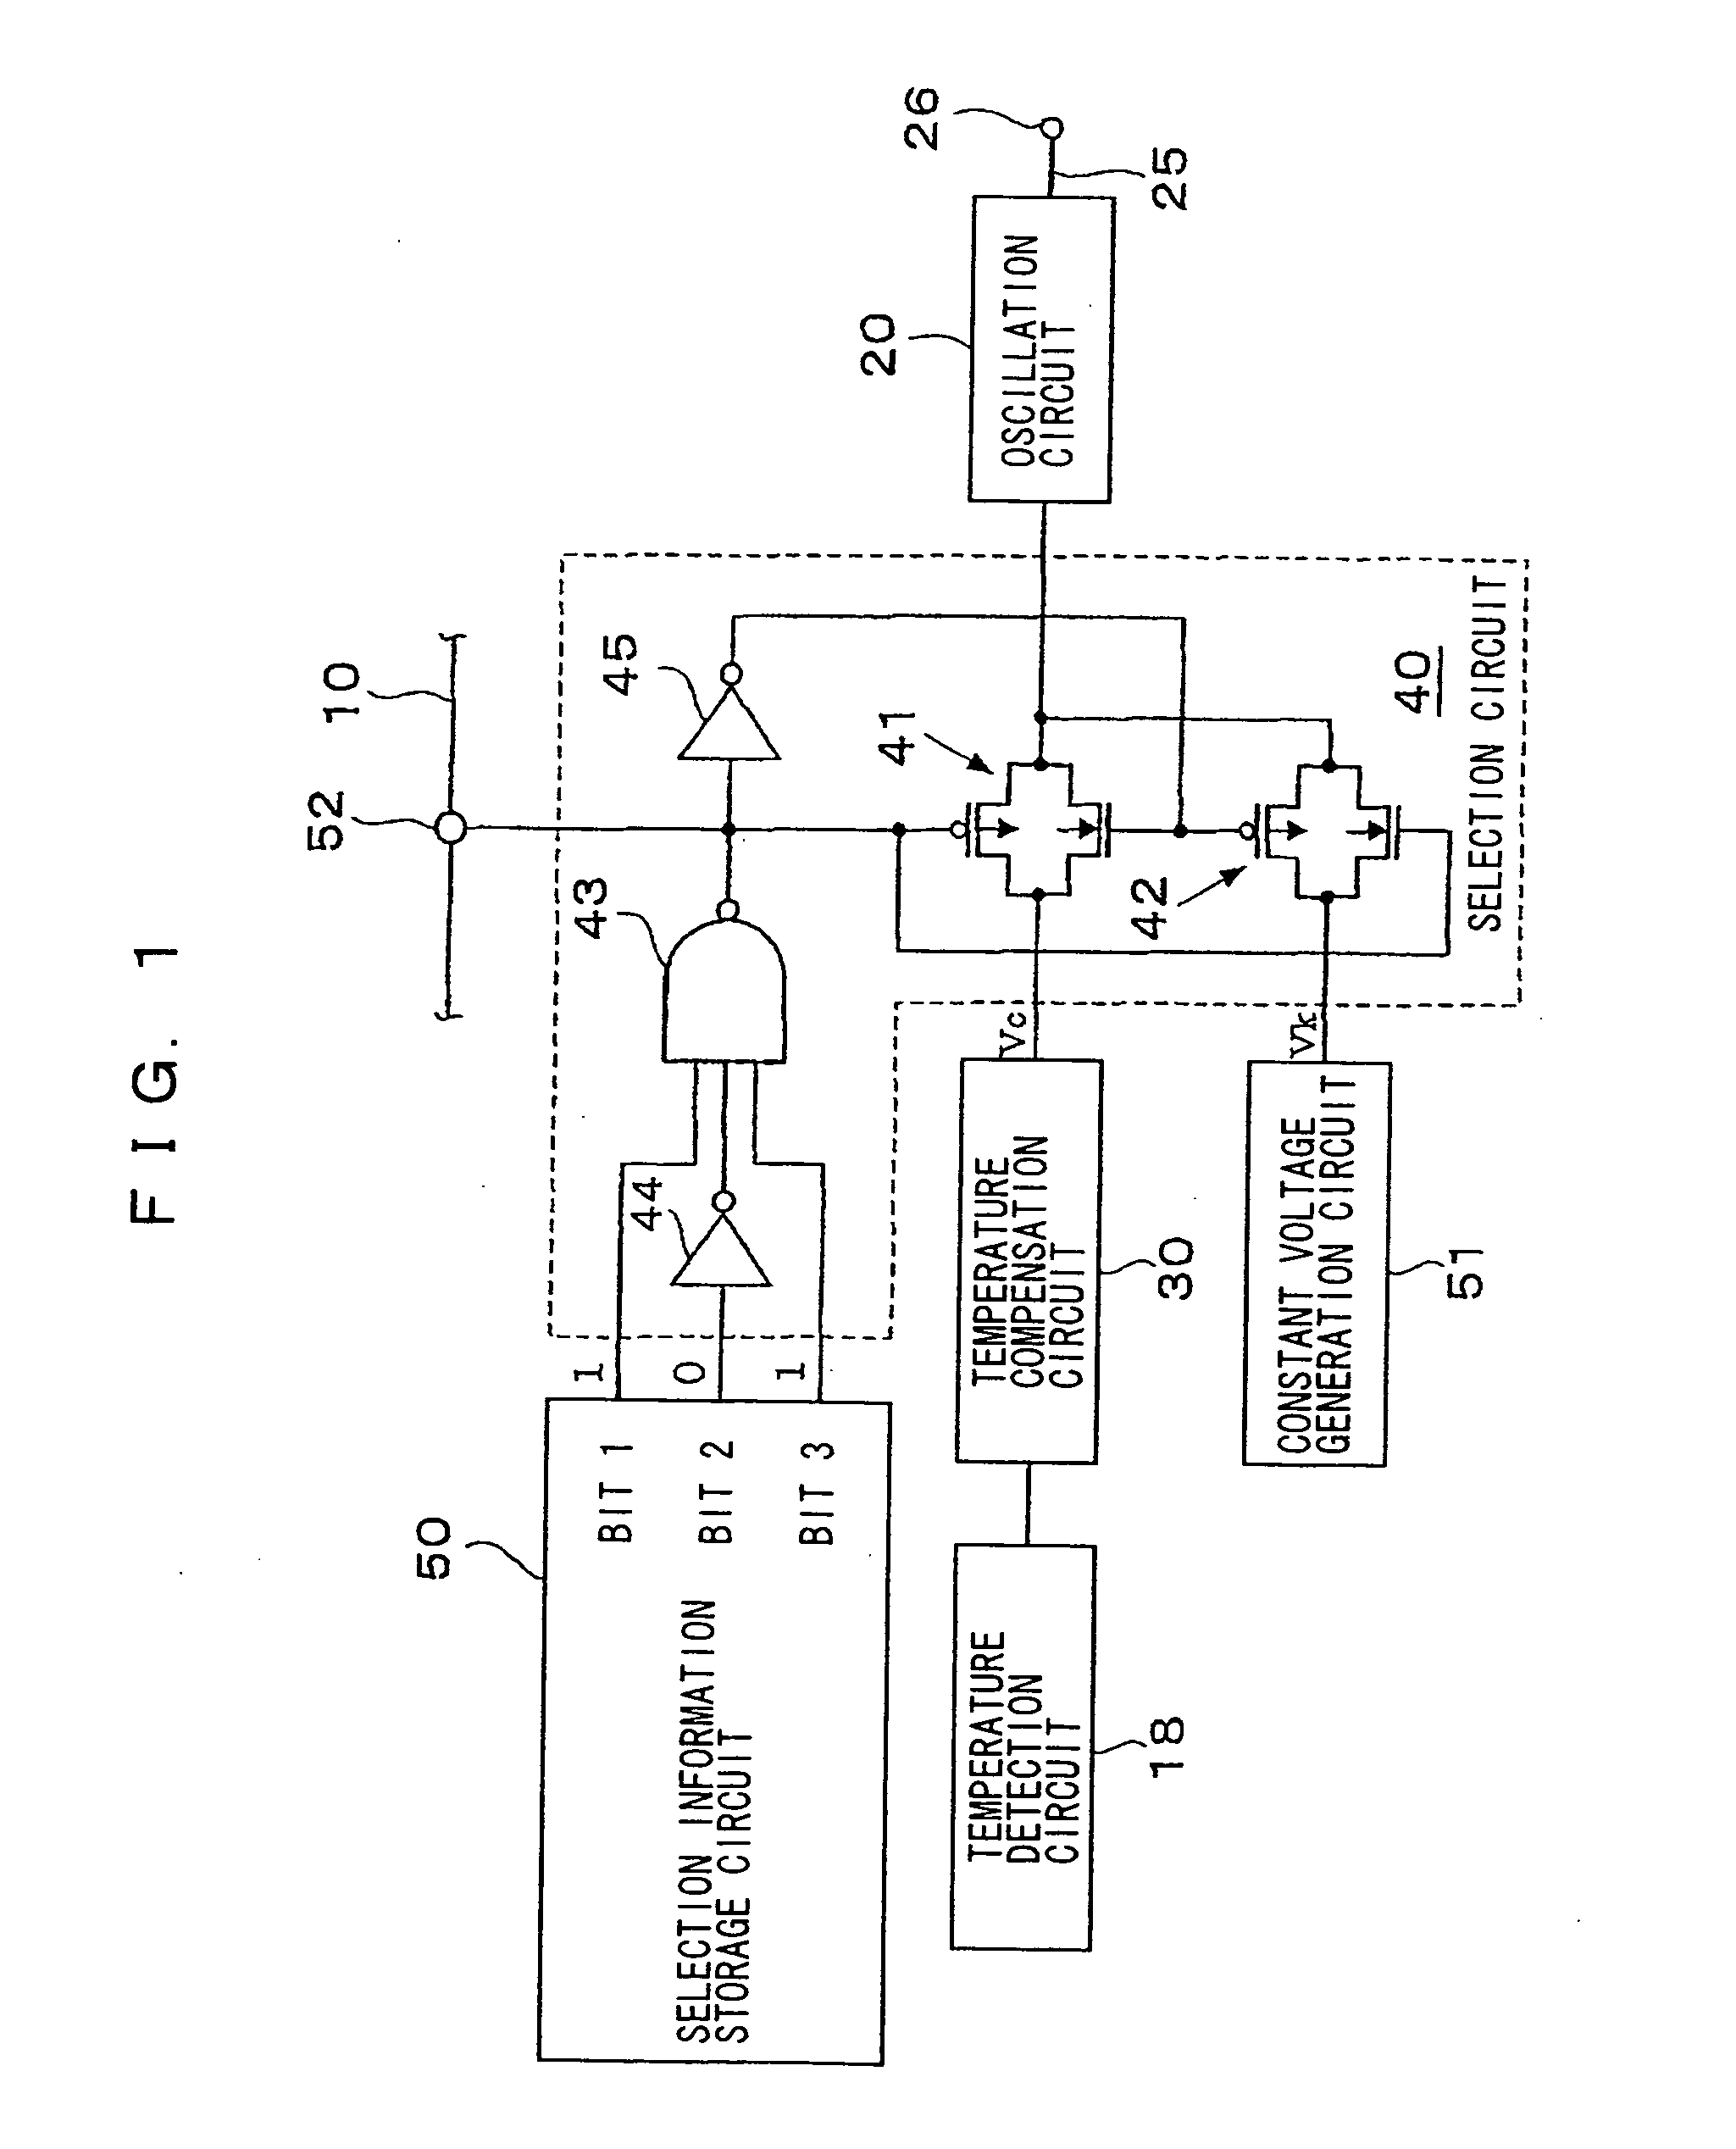 Method of manufacturing a temperature compensated oscillator